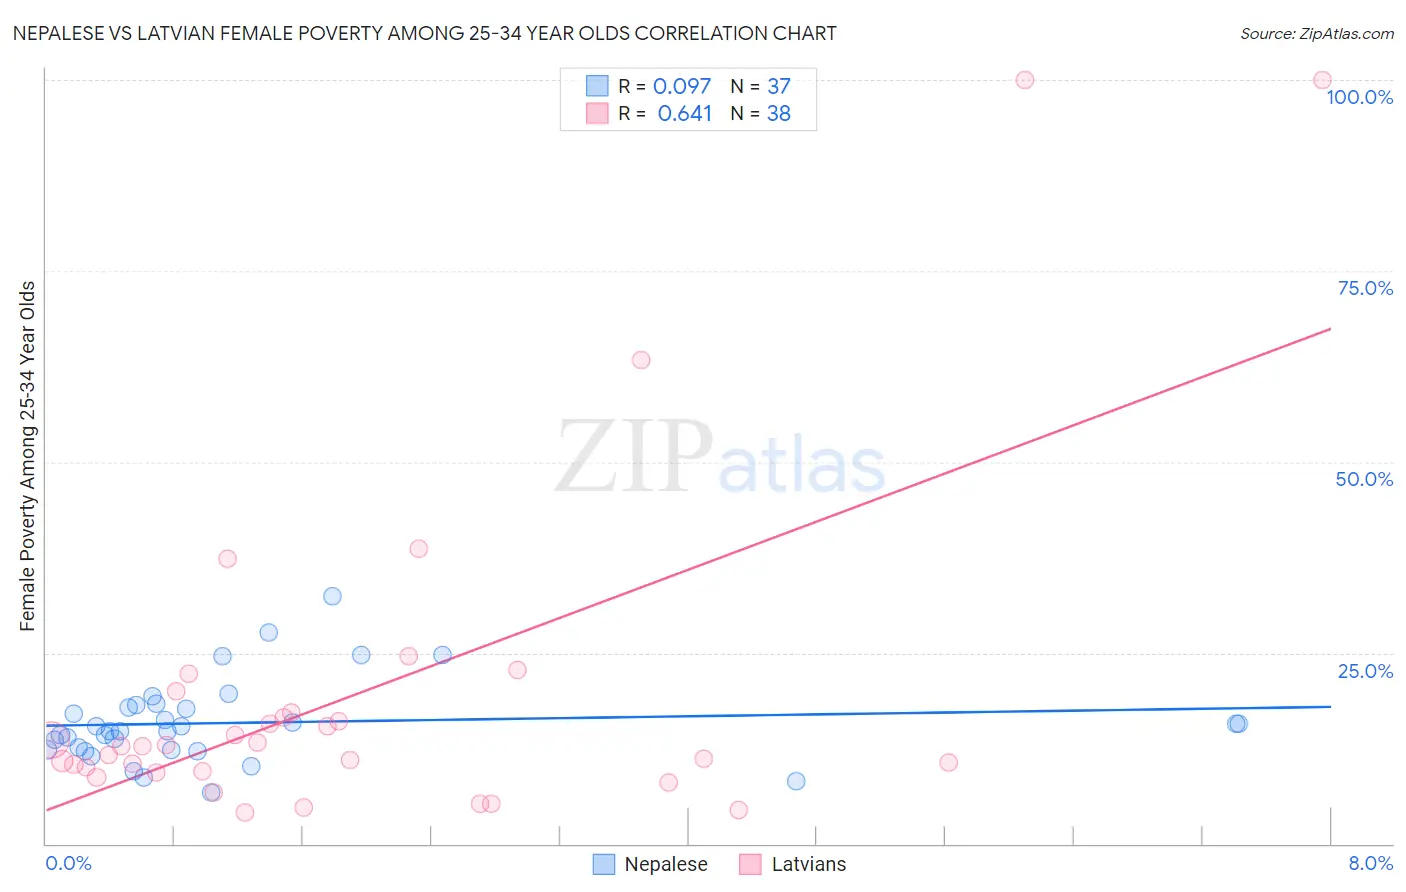 Nepalese vs Latvian Female Poverty Among 25-34 Year Olds